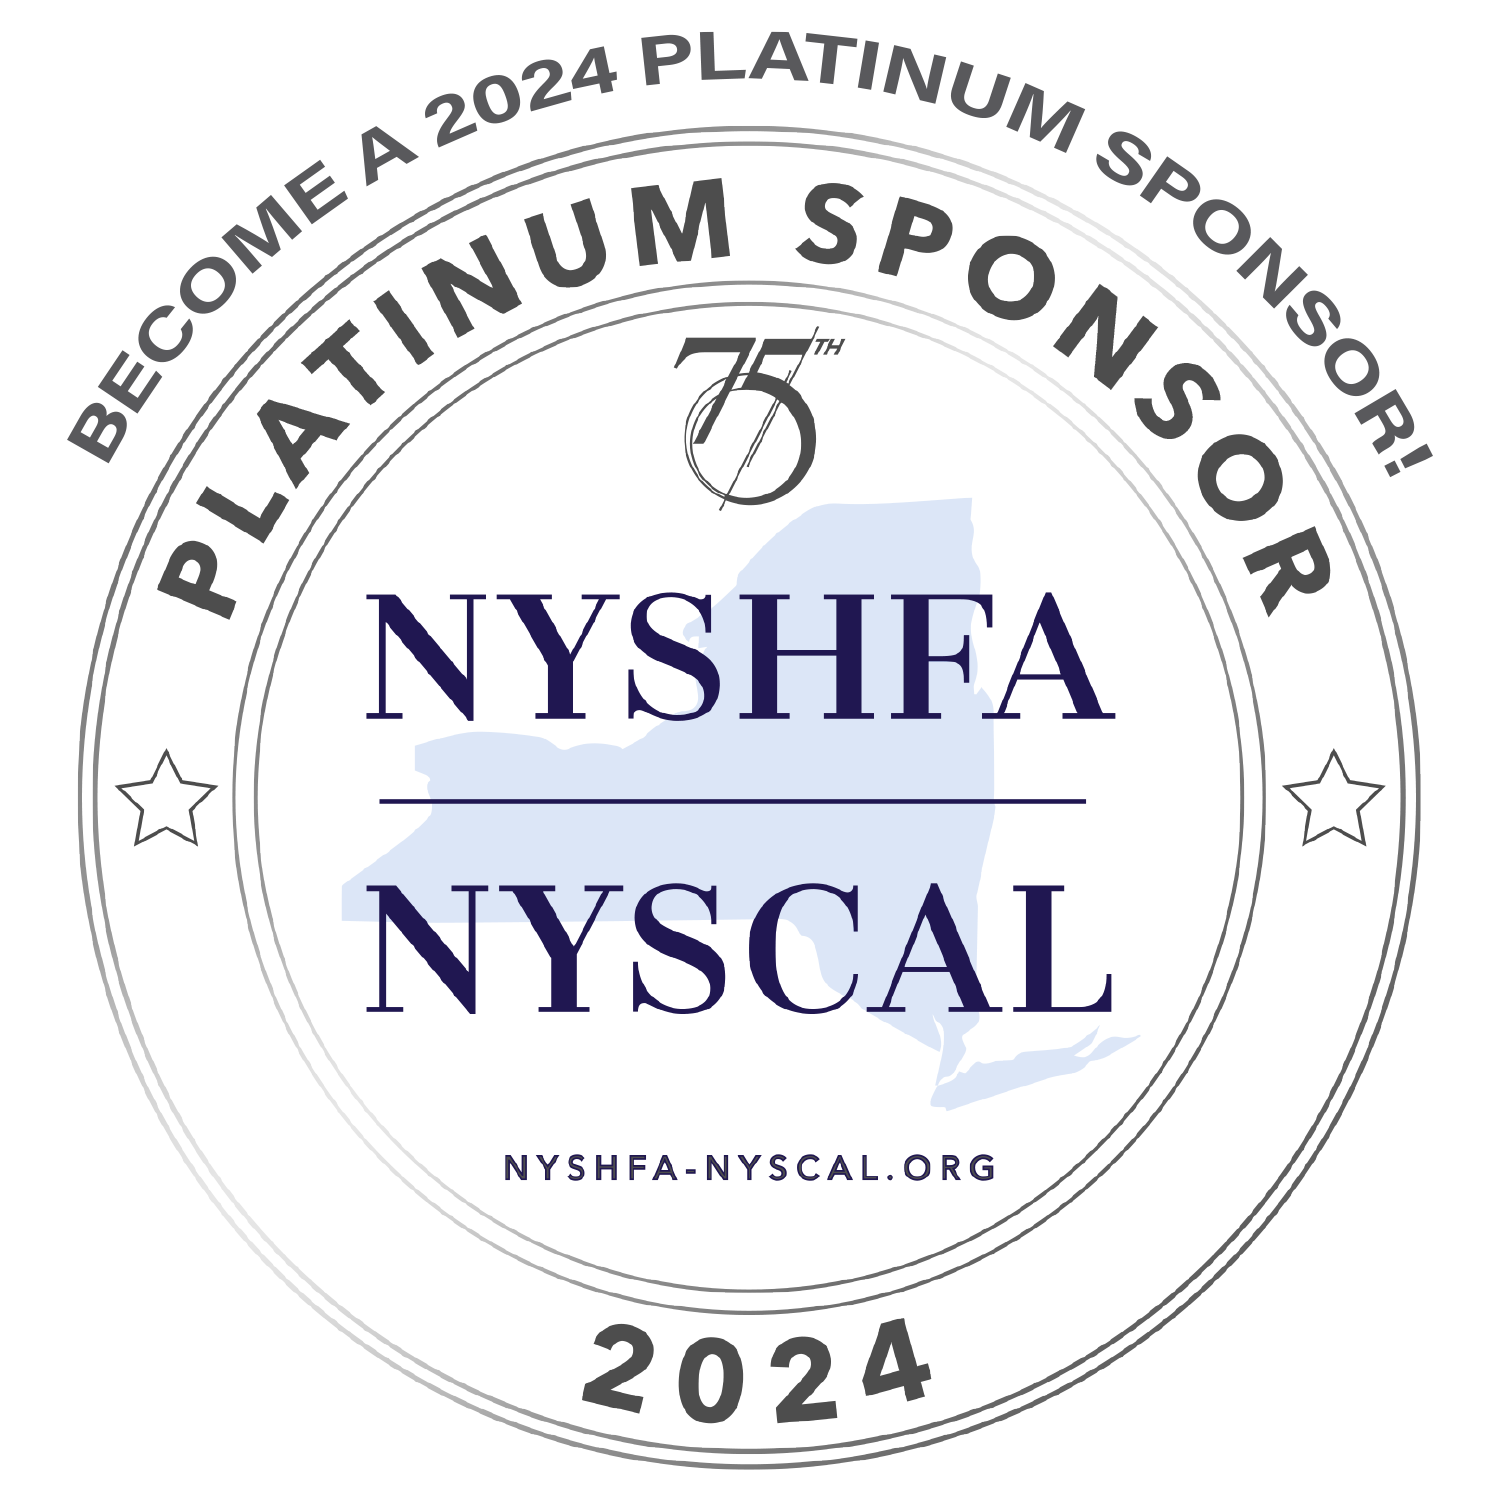 2024 Platinum Sponsors NYSHFA NYSCAL